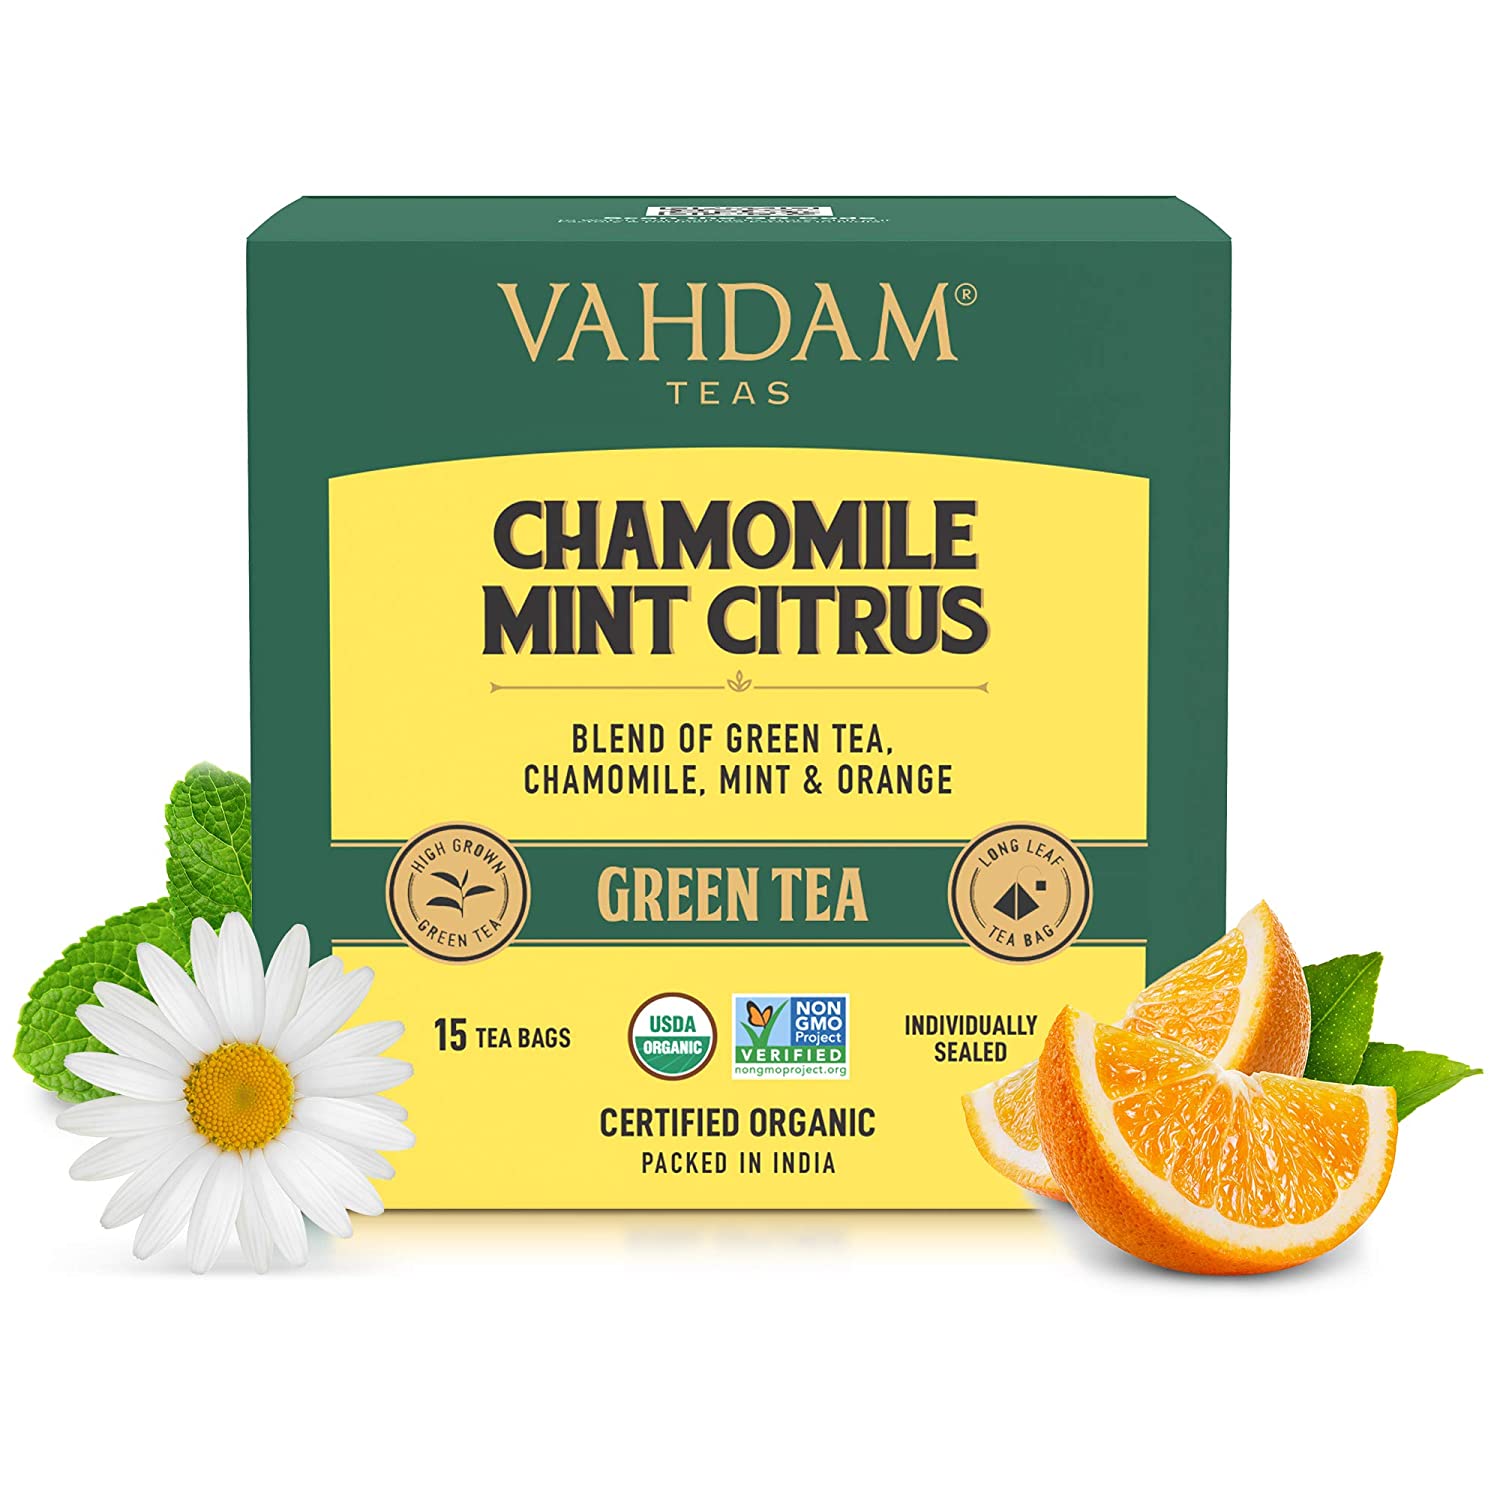 Vahdam Organic Chamomile Green Tea With Mint Image